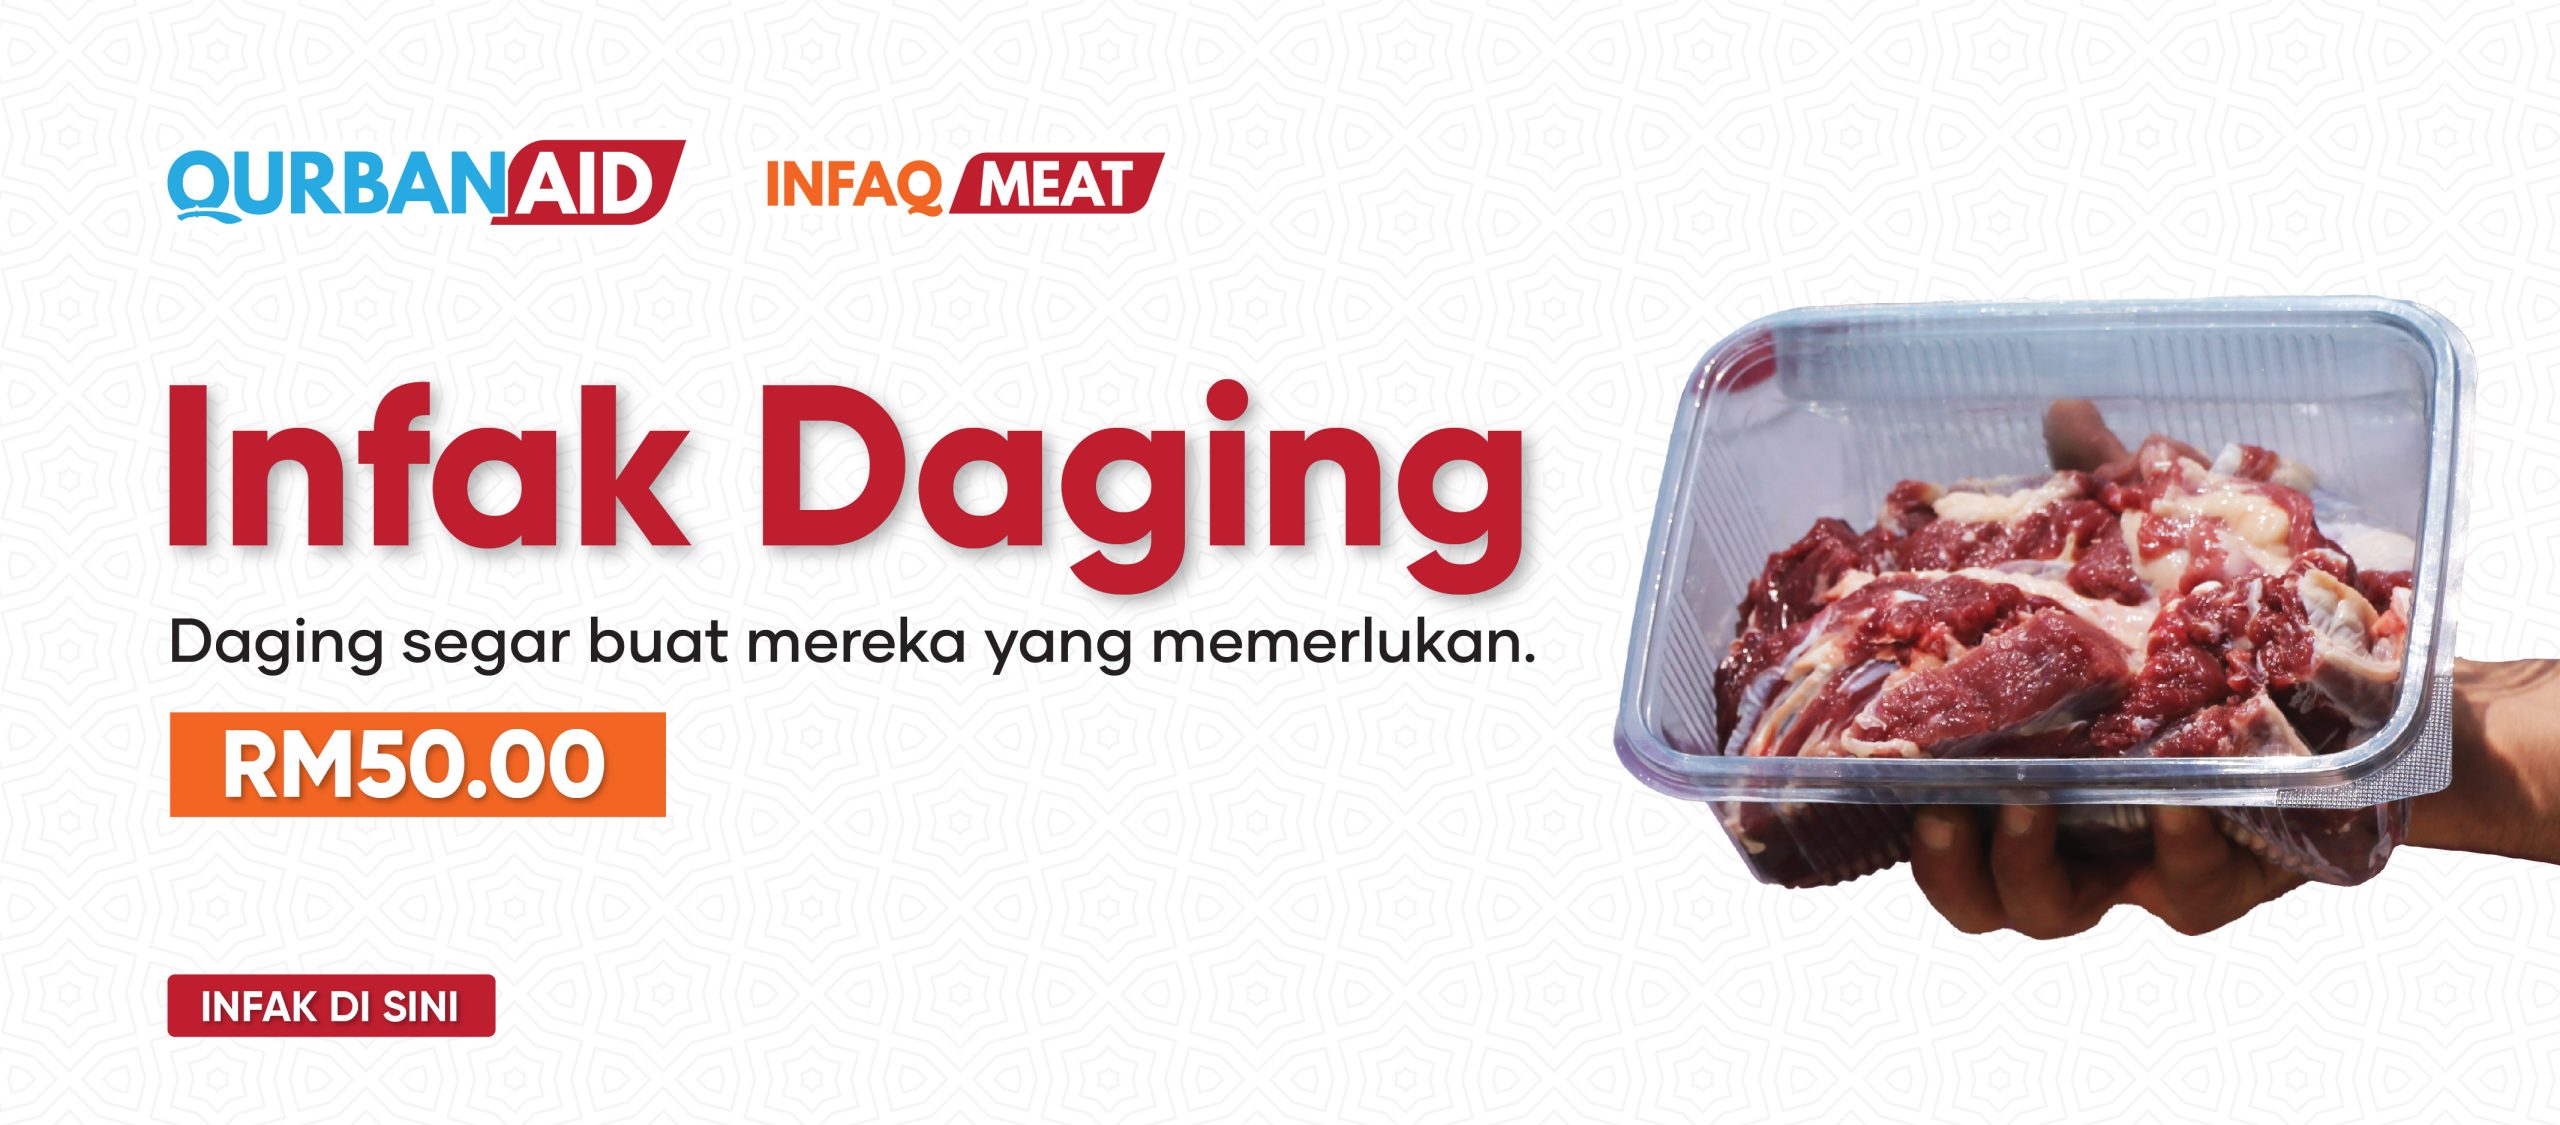 Header website Infaq meat